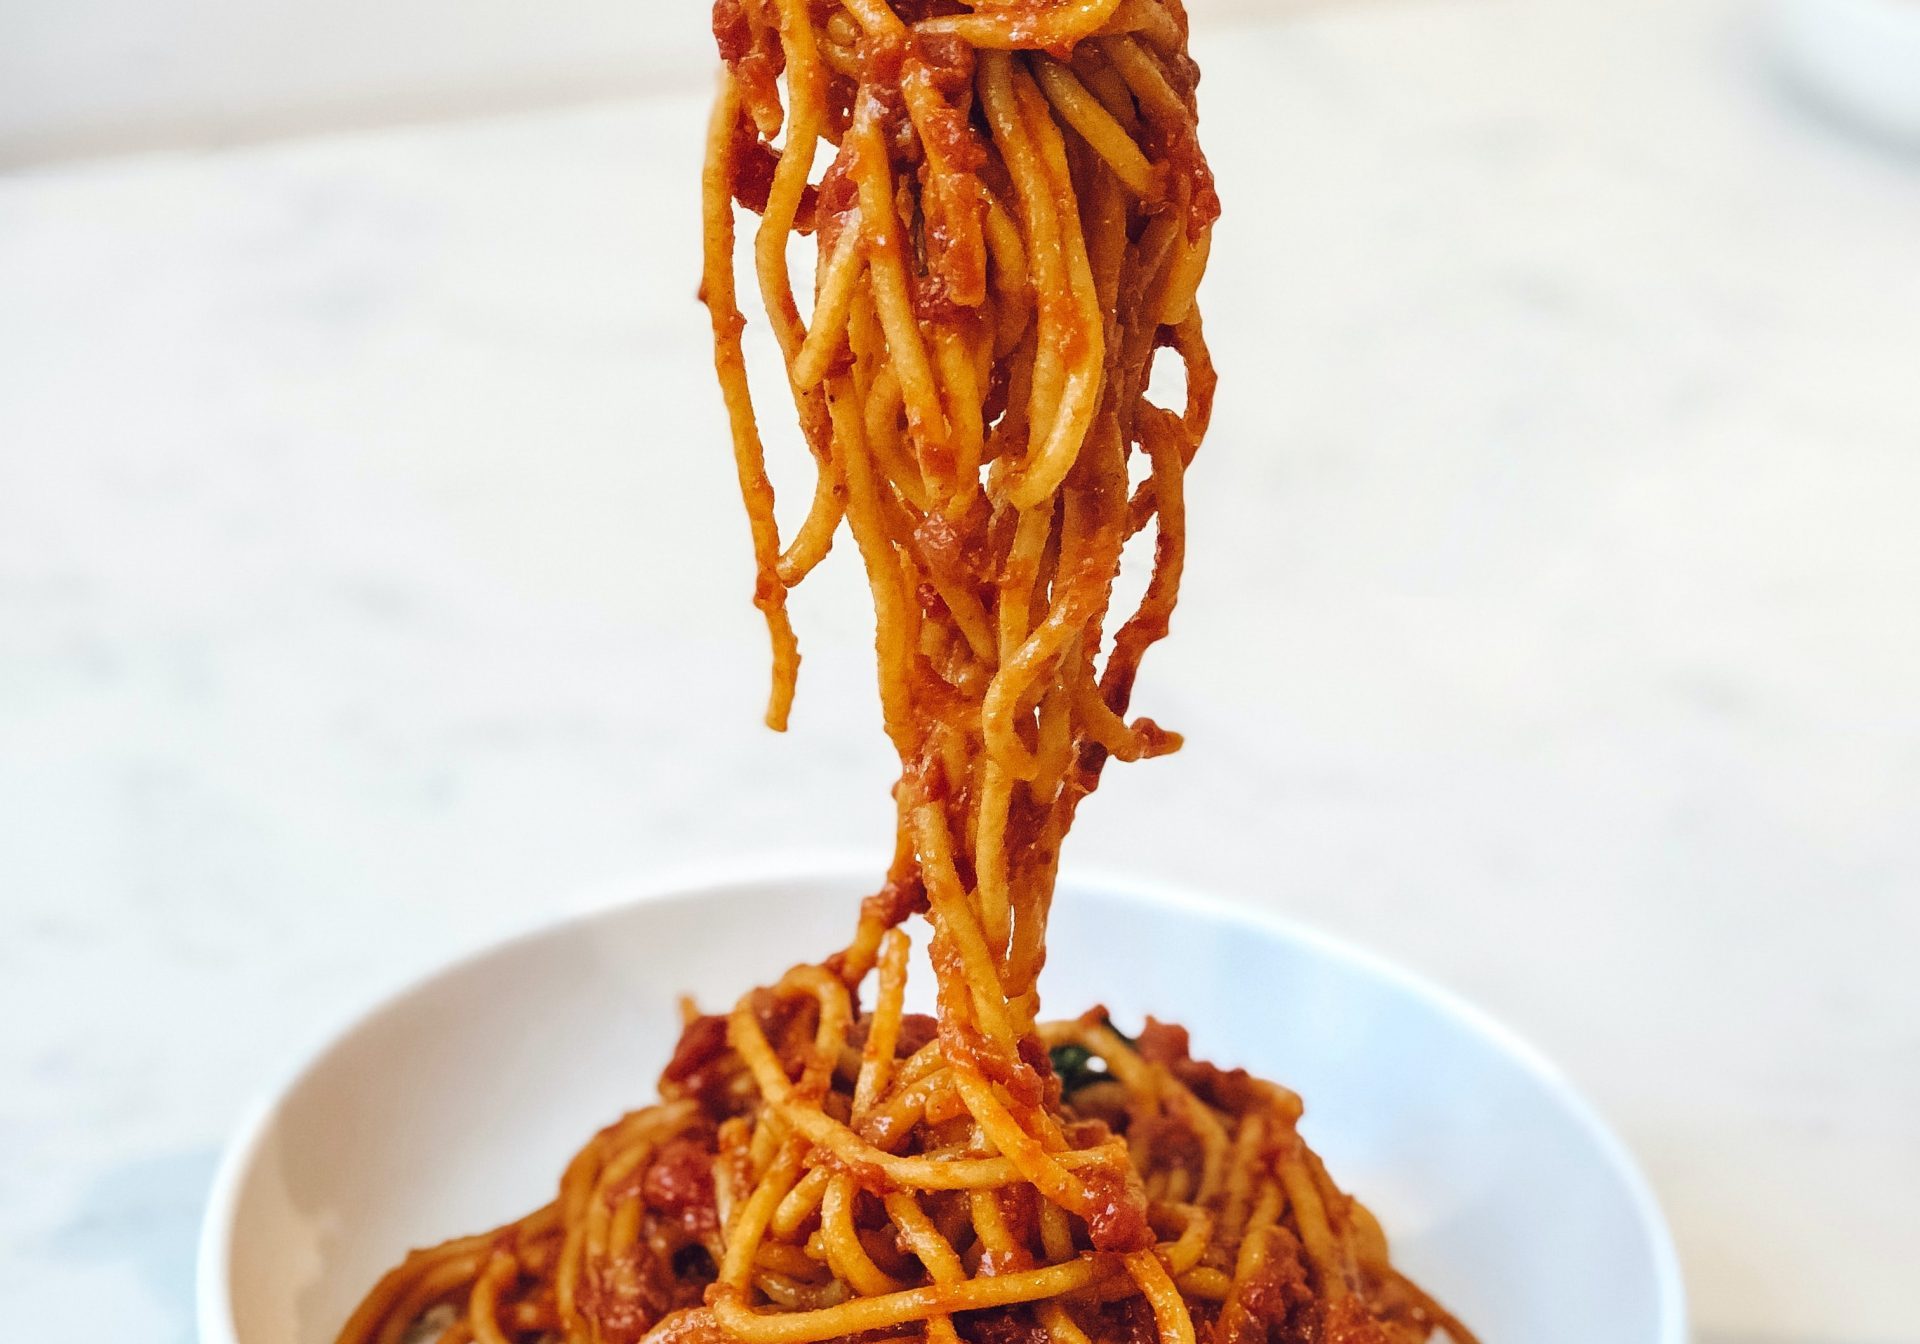 Spaghetti with tomato sauce in a white bowl on white background